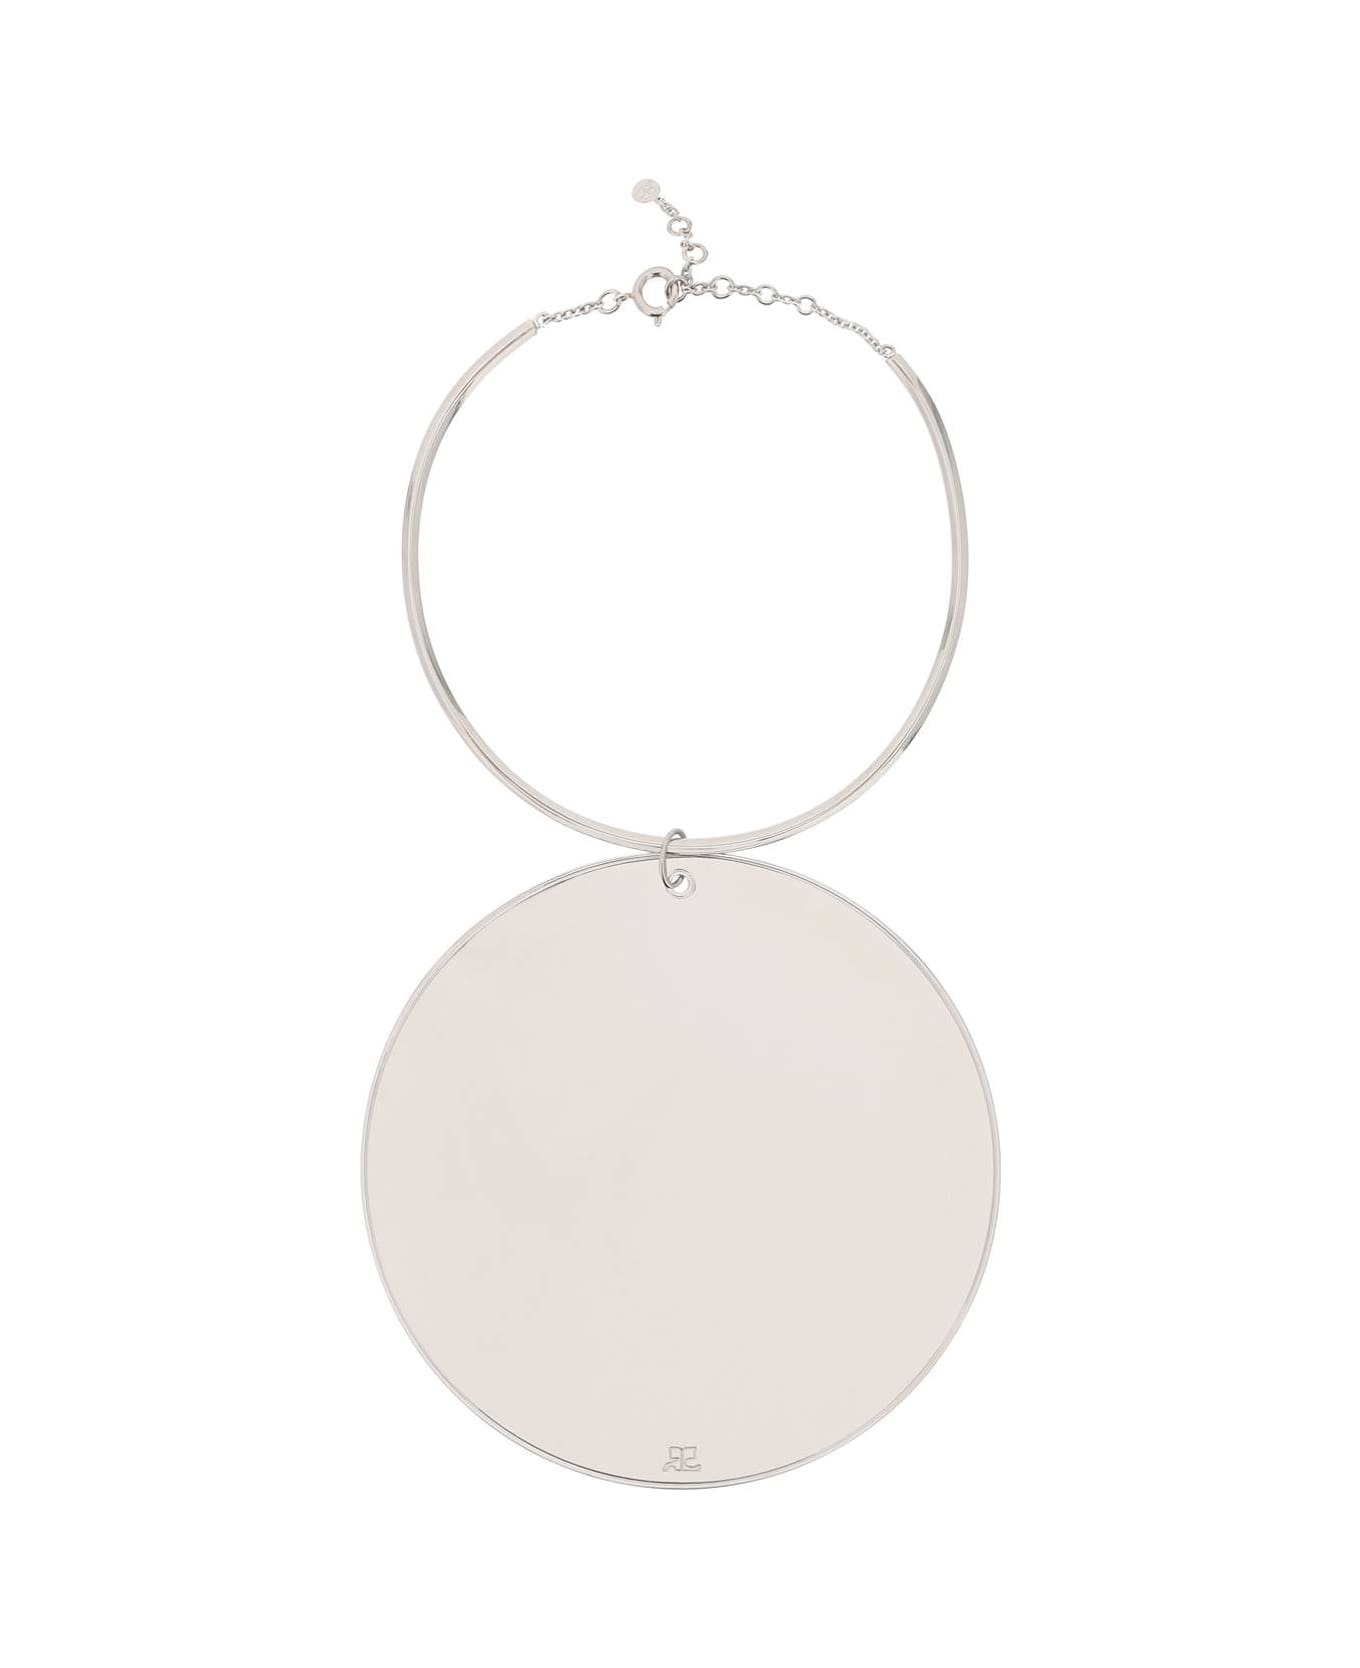 Courrèges Mirror Charm Necklace - Silver